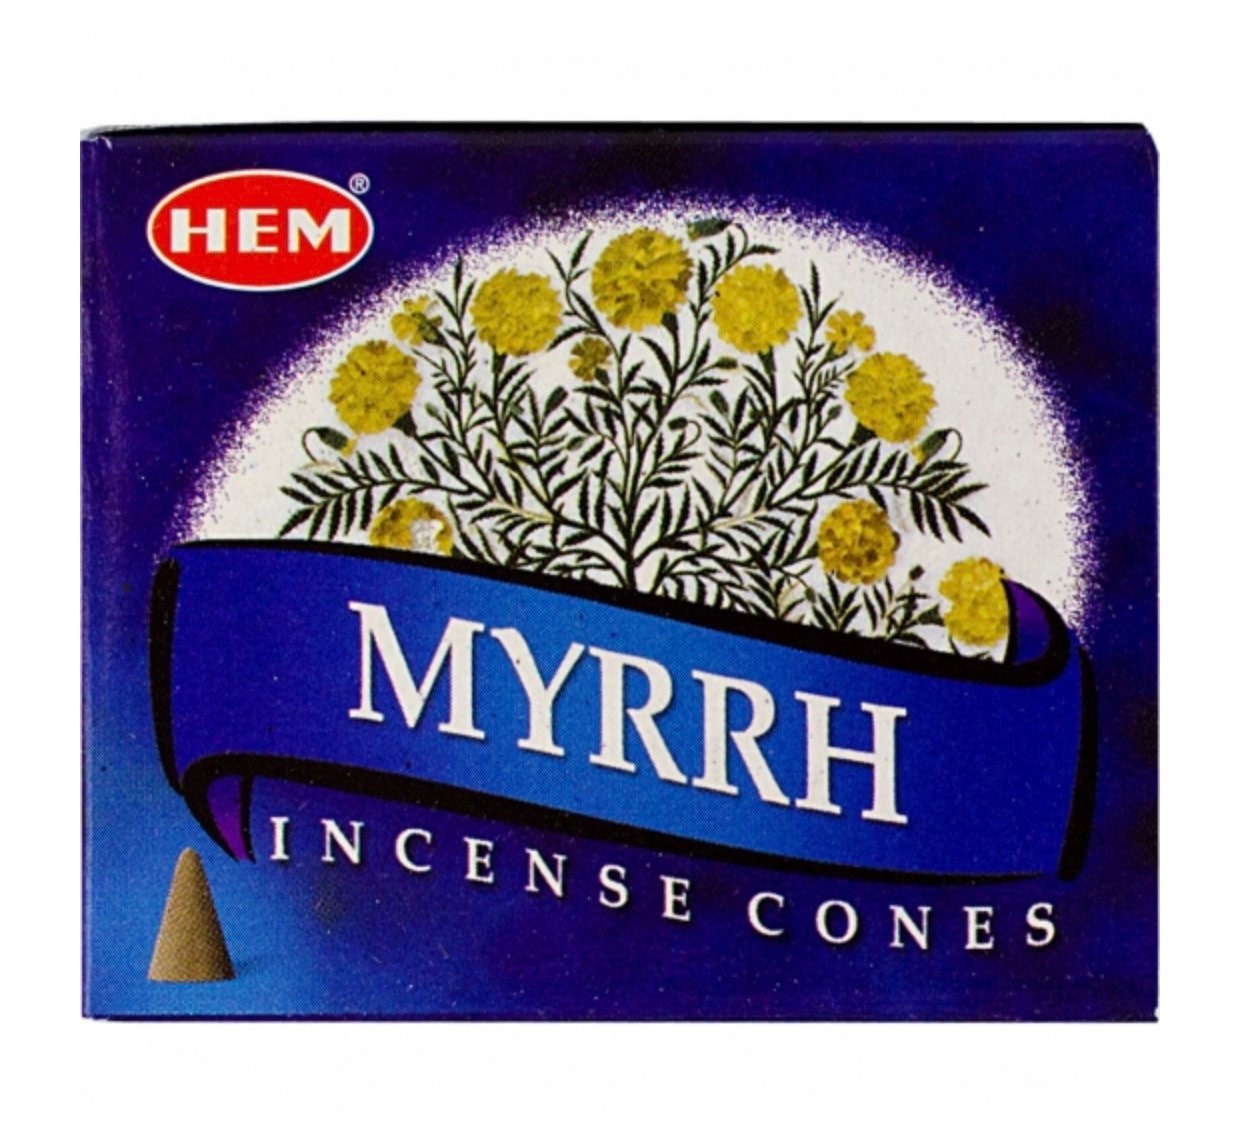 Hem Incense Cones 2 Boxes 10 cones Myrrh total 20 cones